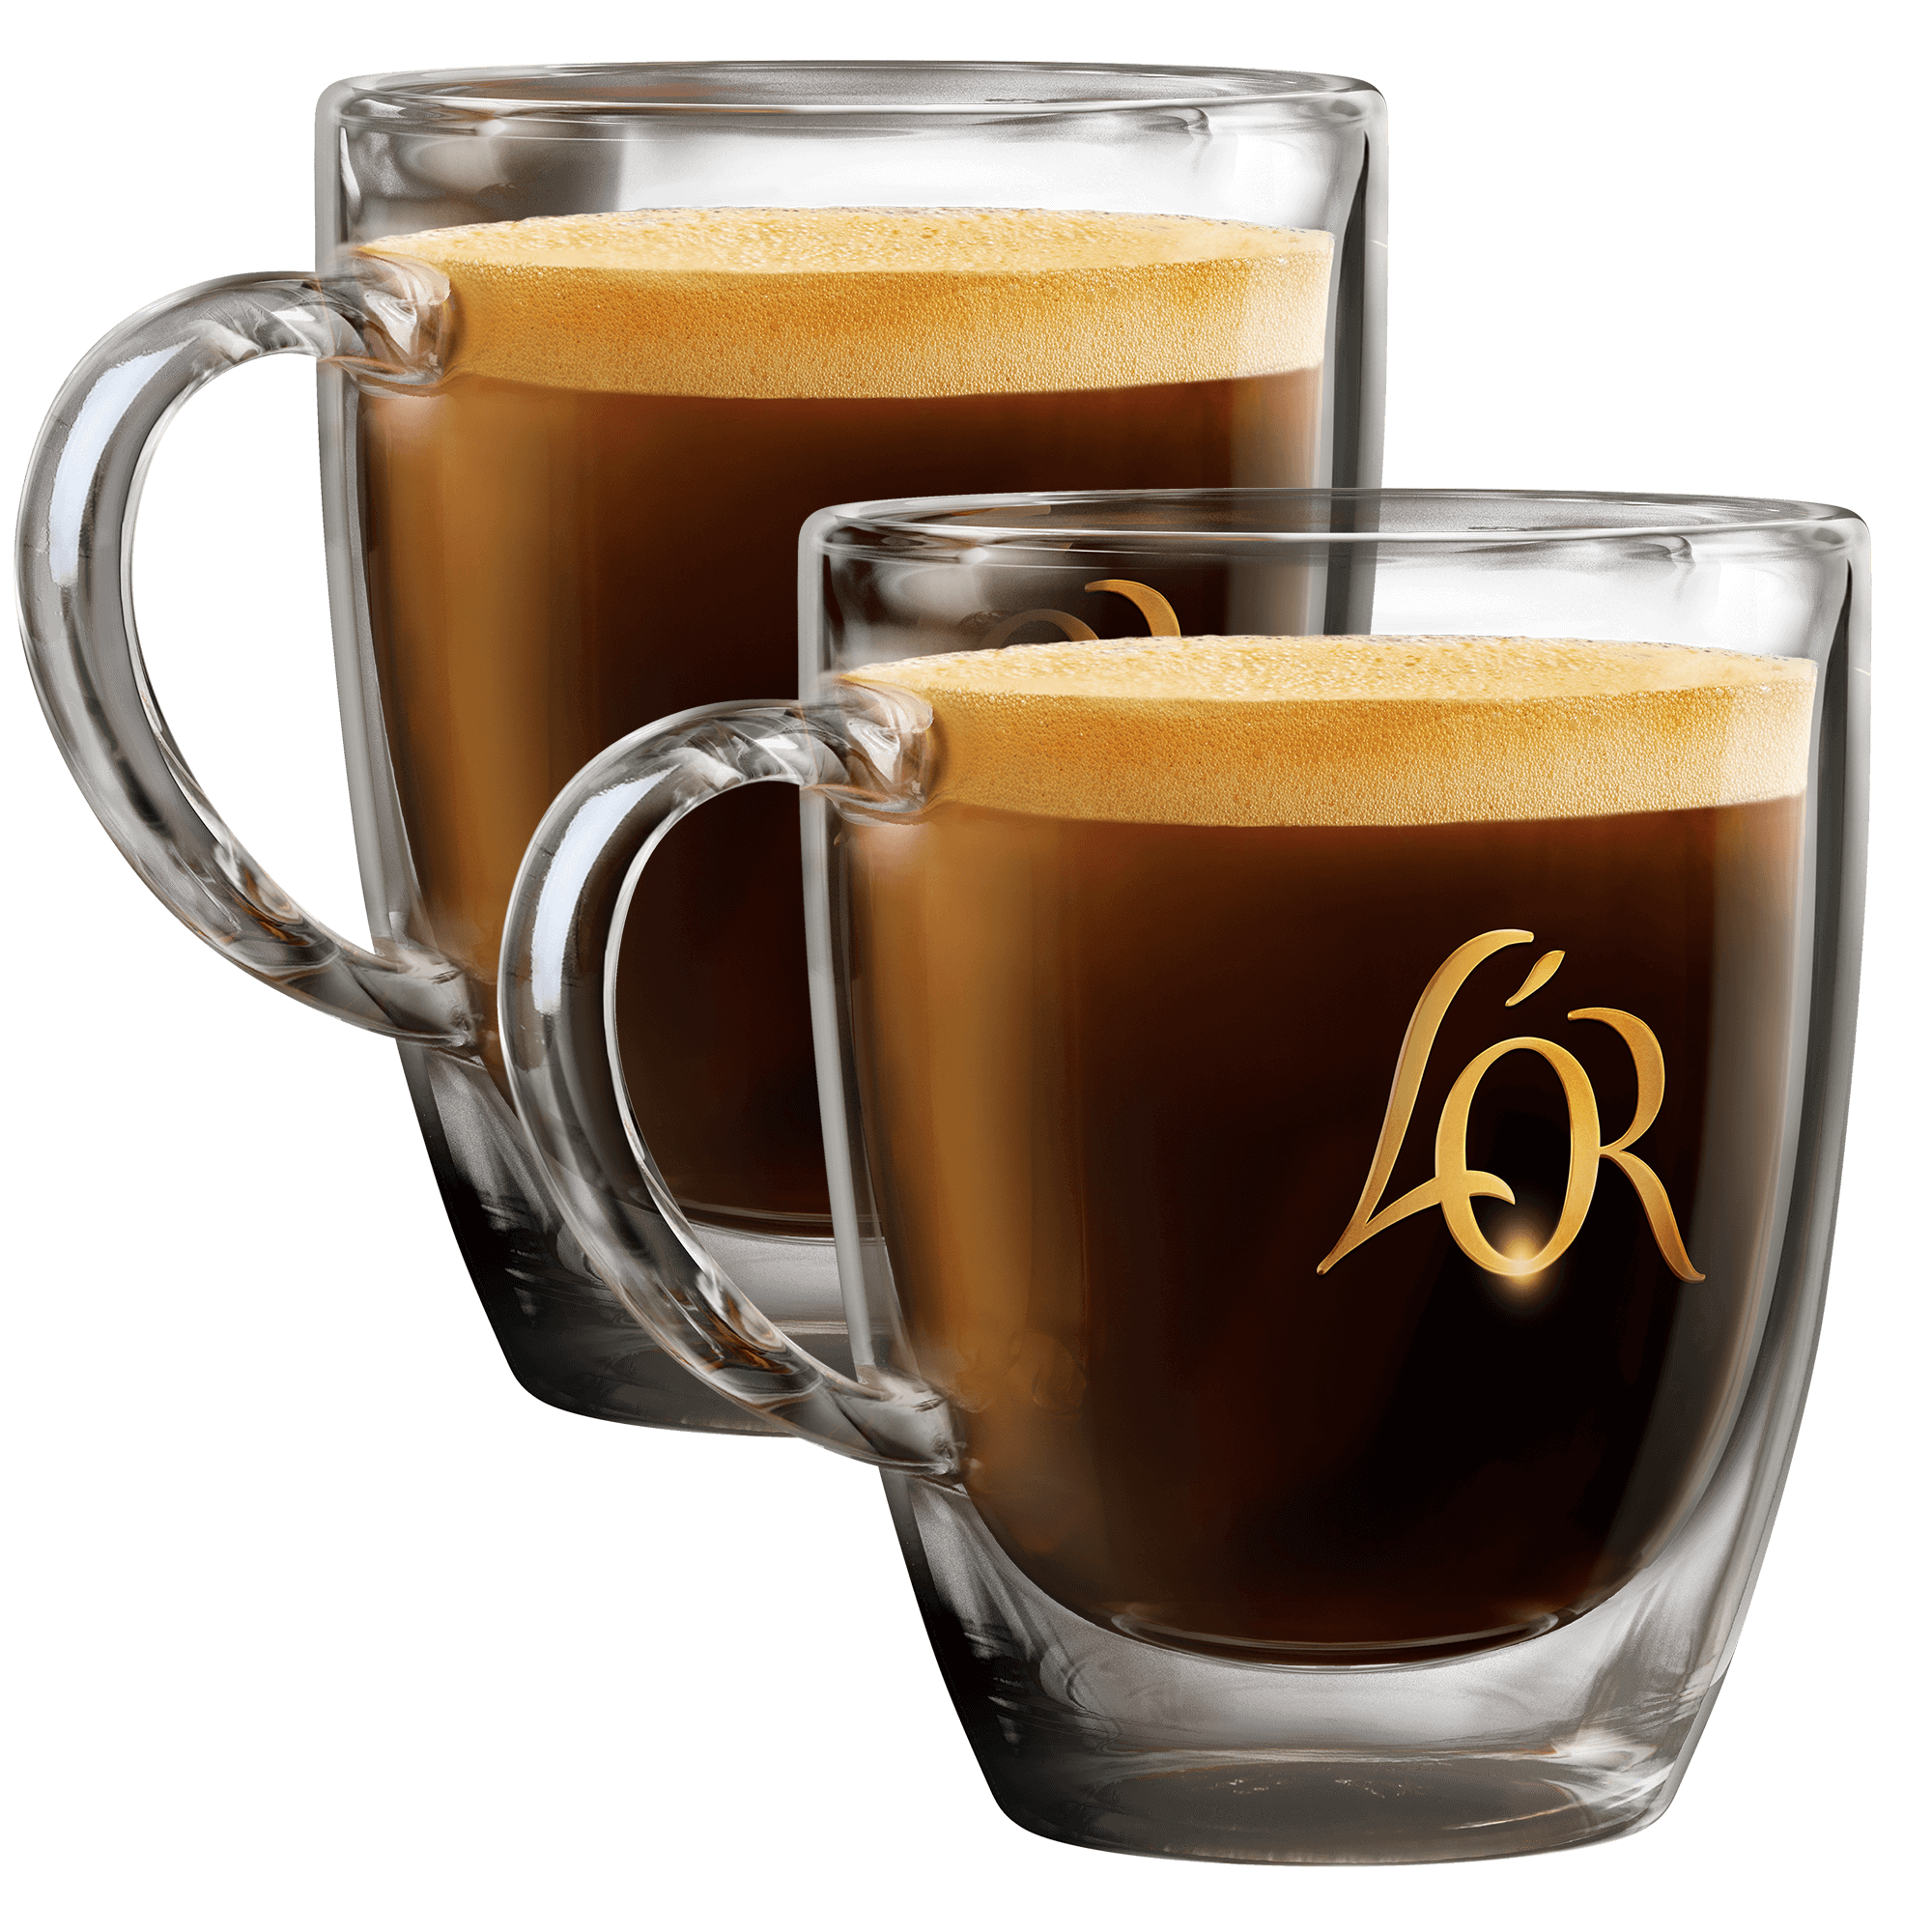 Barista Set of 2 Coffee Mugs, 18oz